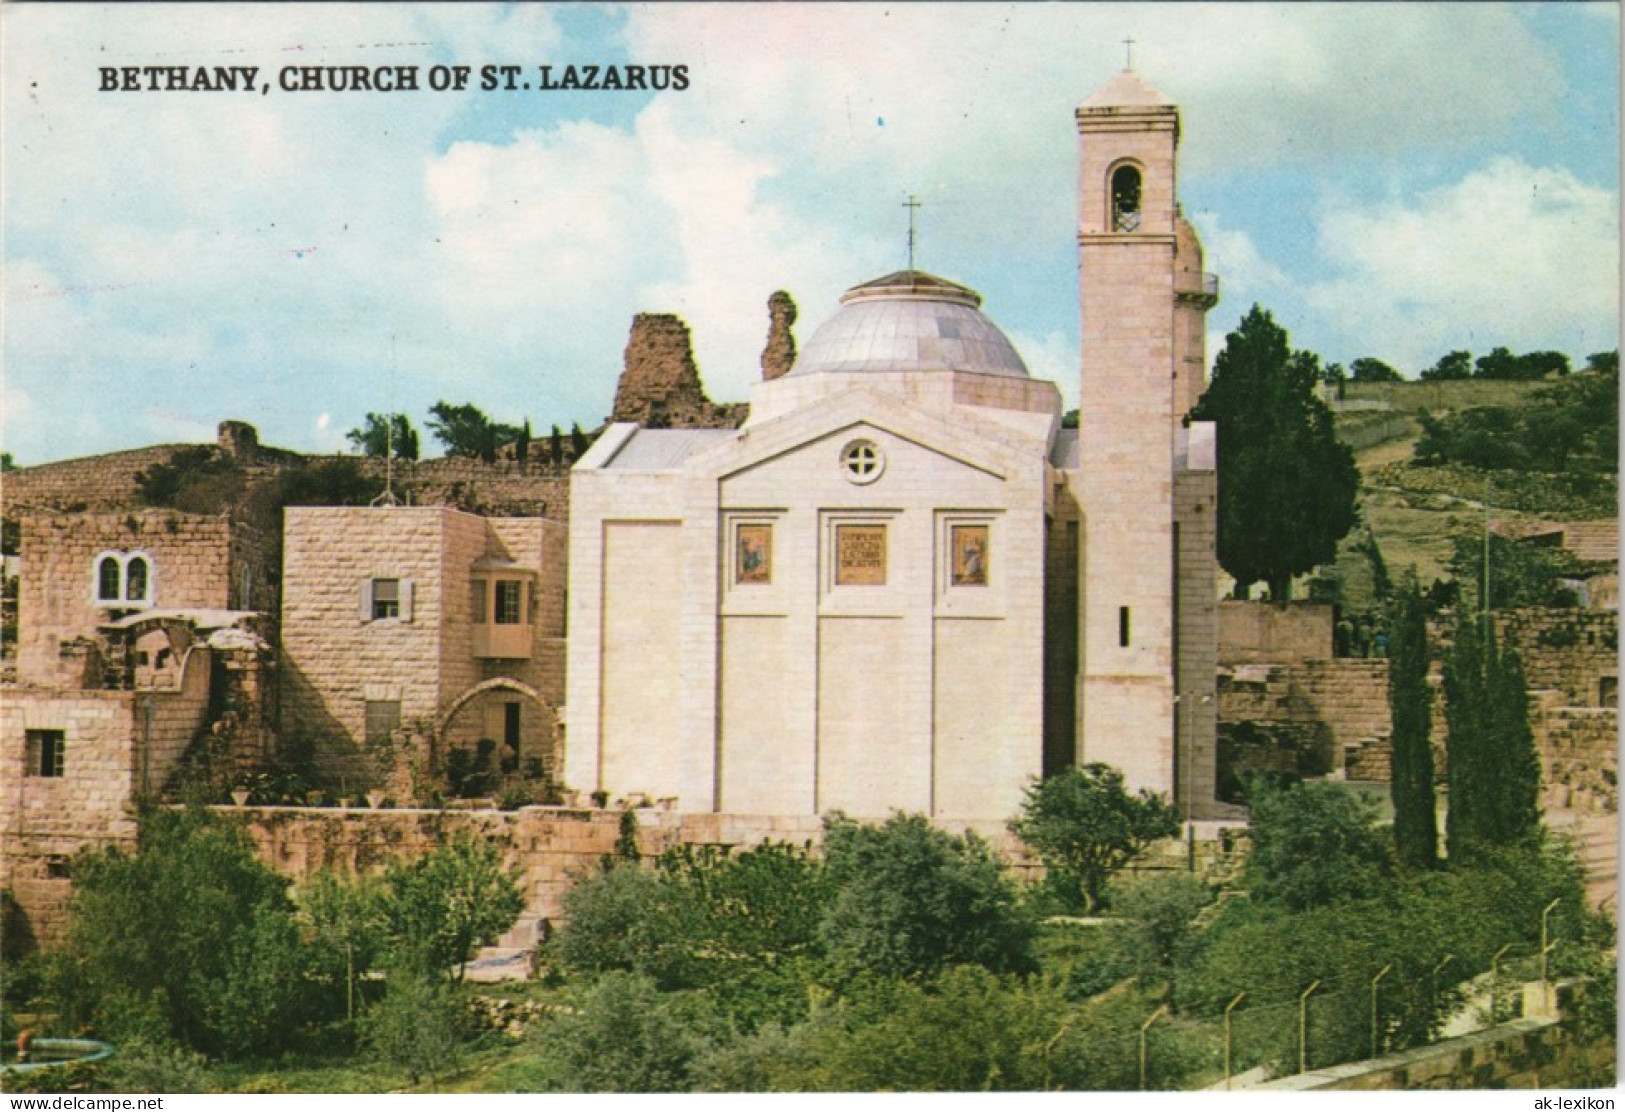 Bethanien-Al-Eizariya בית עניה Al-Izzariya/אלעיזריה  GARDEN MARTHA, Church 1970 - Israel